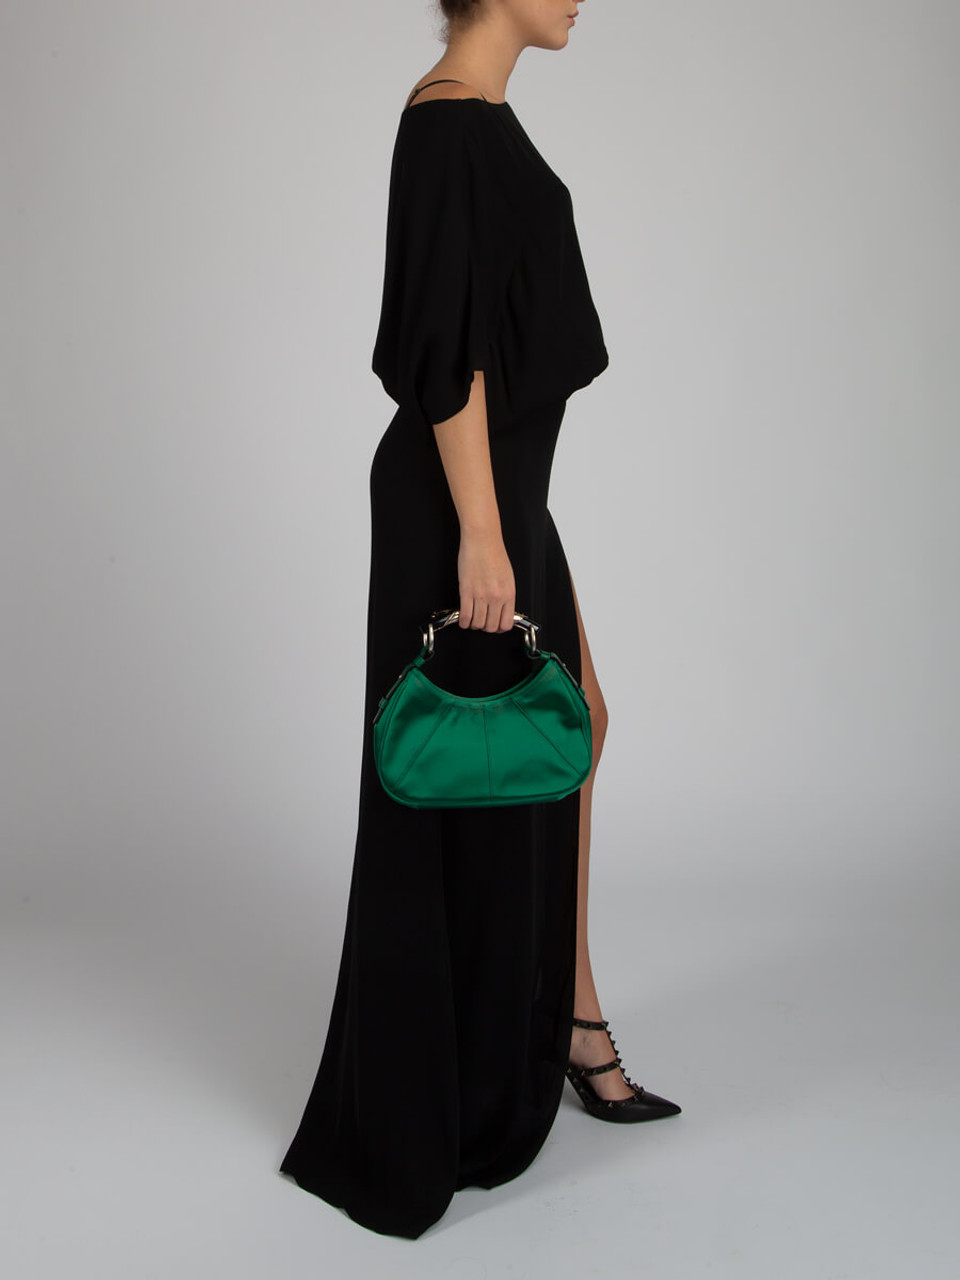 Valentino Garavani Women's Maxi Dress with Slit, Size 12 UK, Black, Silk